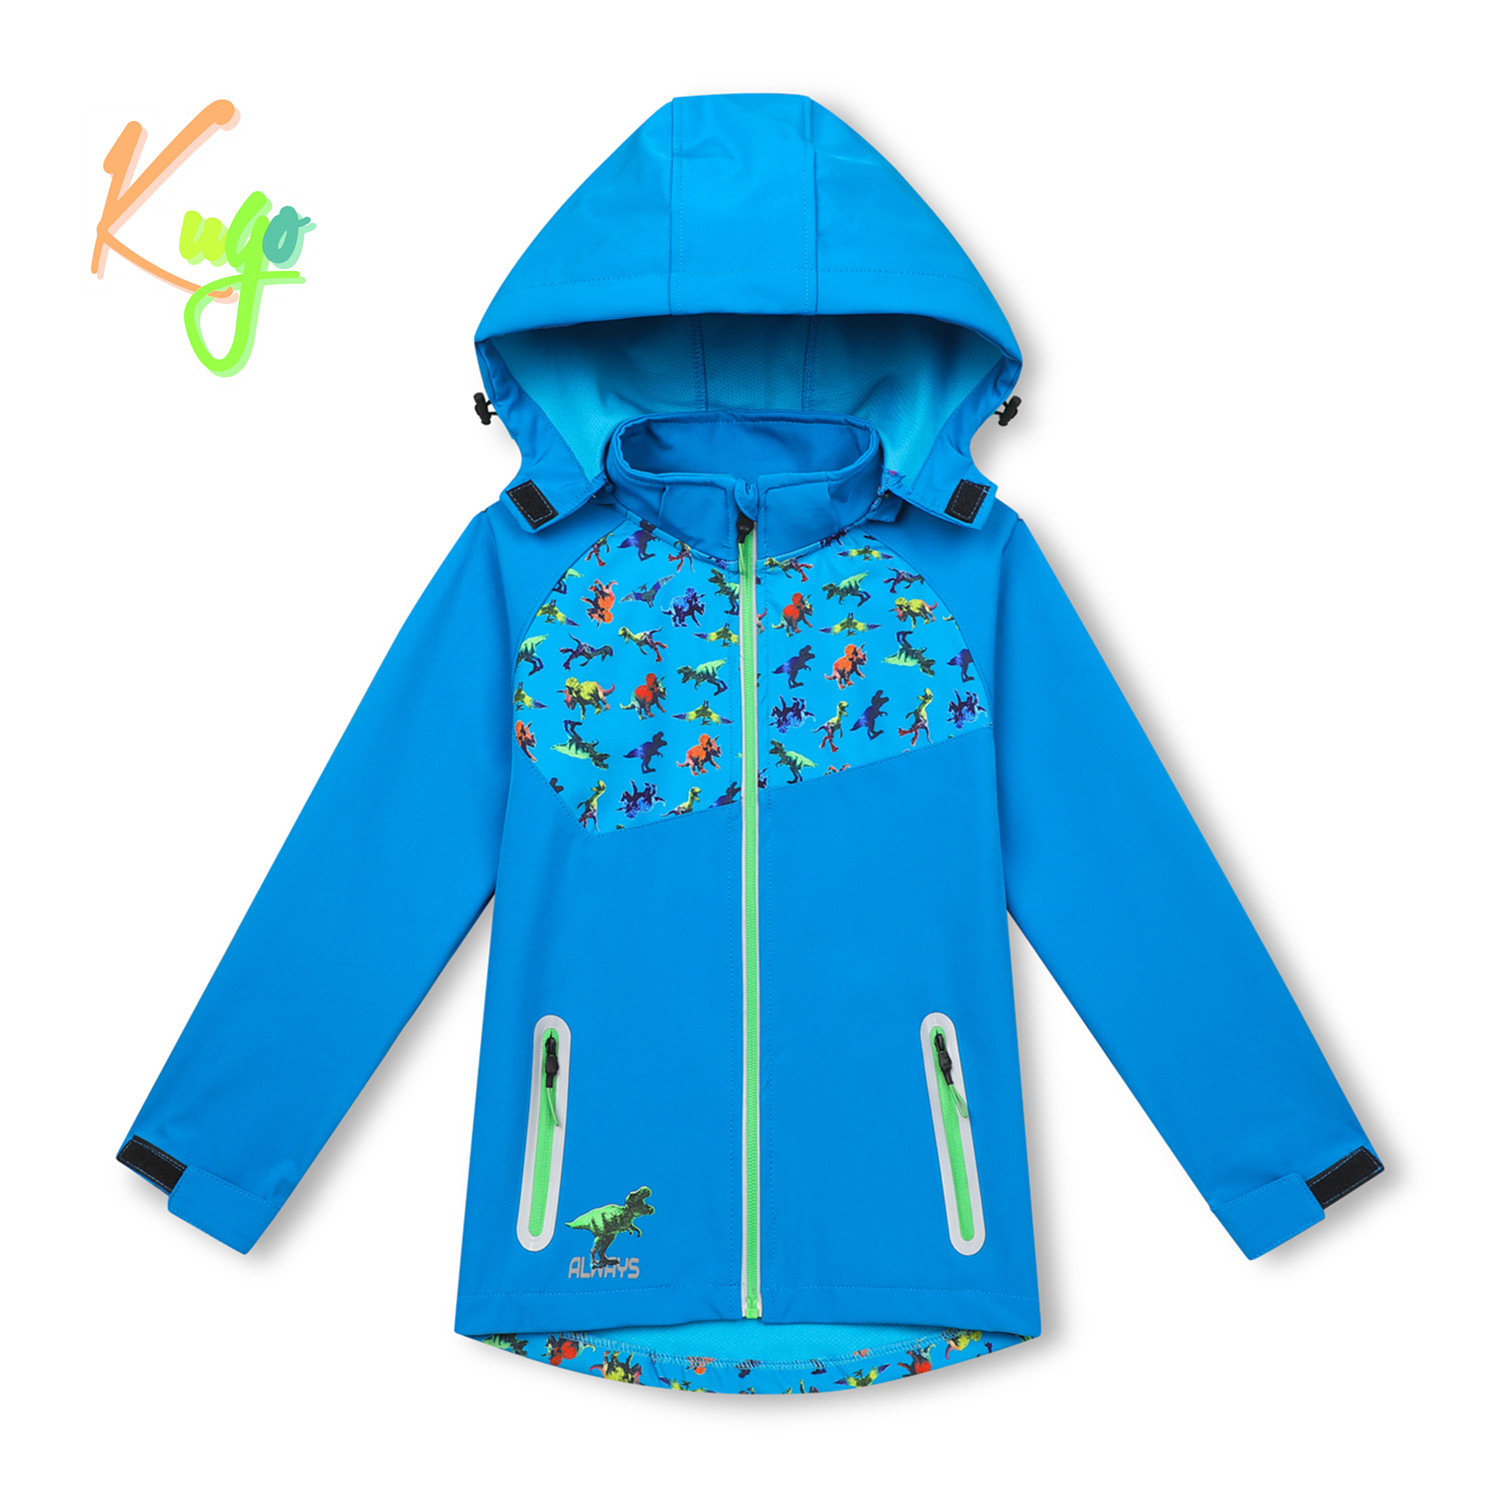 Chlapecká softshellová bunda - KUGO HK3123, modrá Barva: Modrá, Velikost: 128